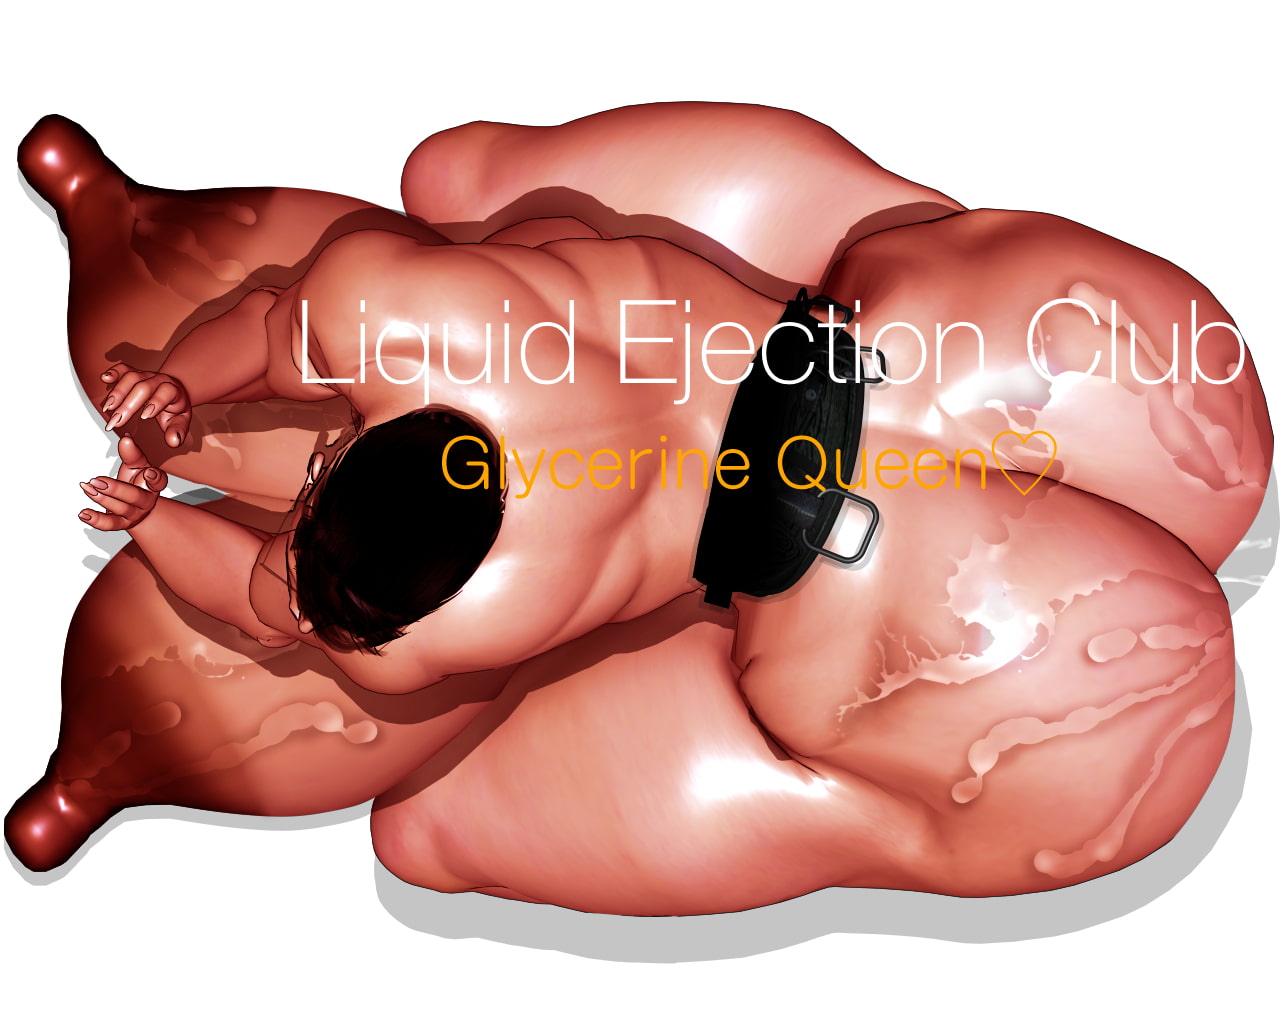 Liquid Ejection Club - 卑語淫交の褐色女教師